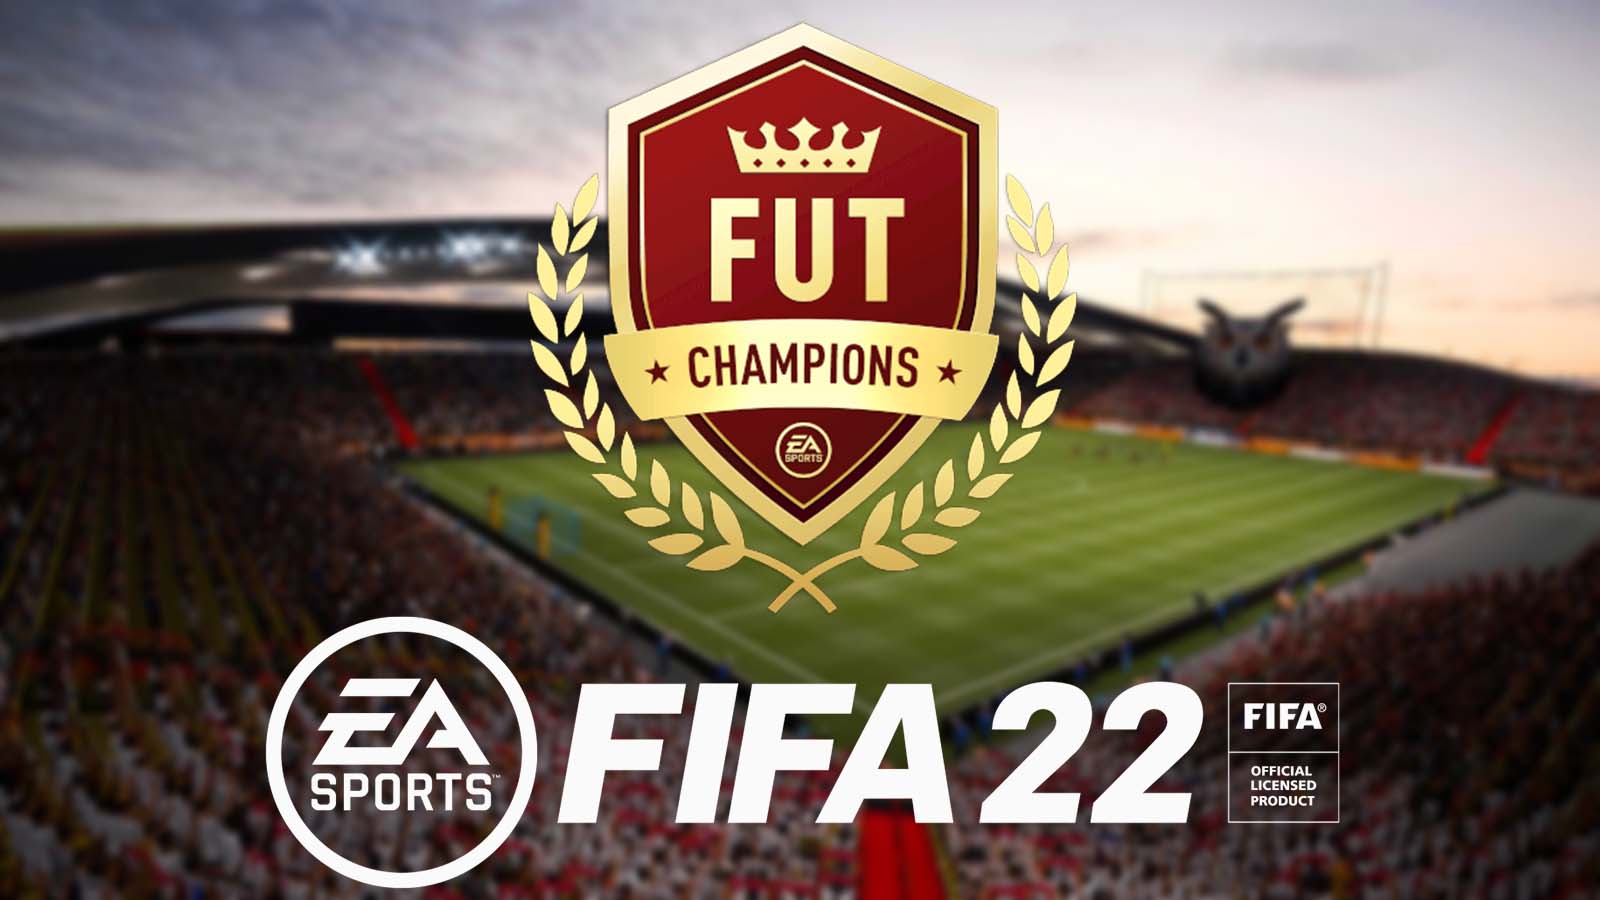 FUT Champs rewards FIFA 22